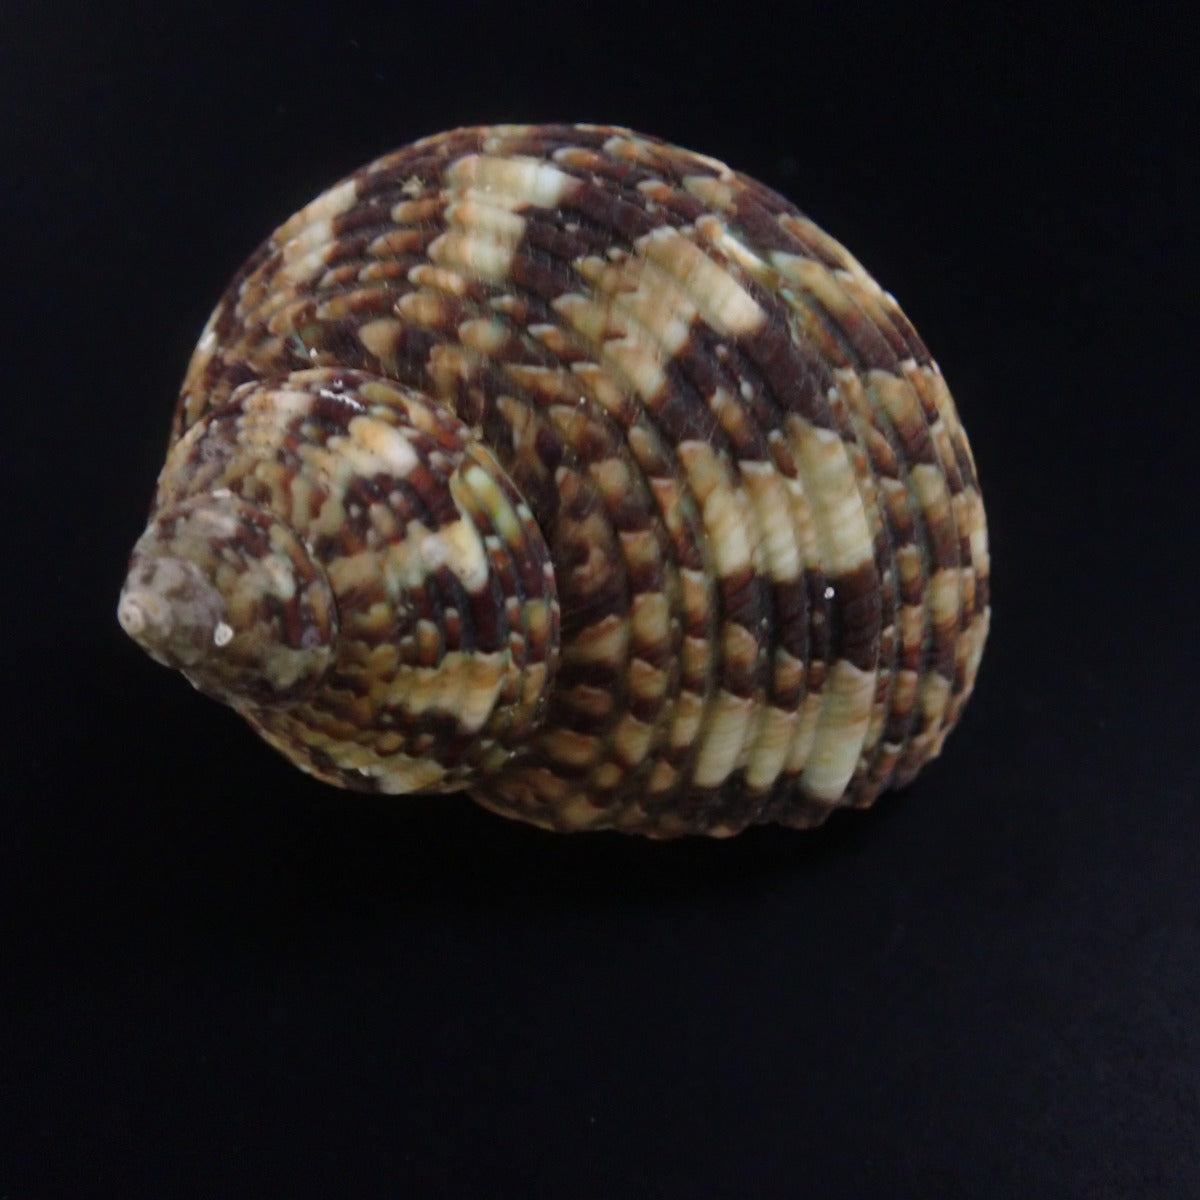 Turbo brunneus - Dwarf turban snail